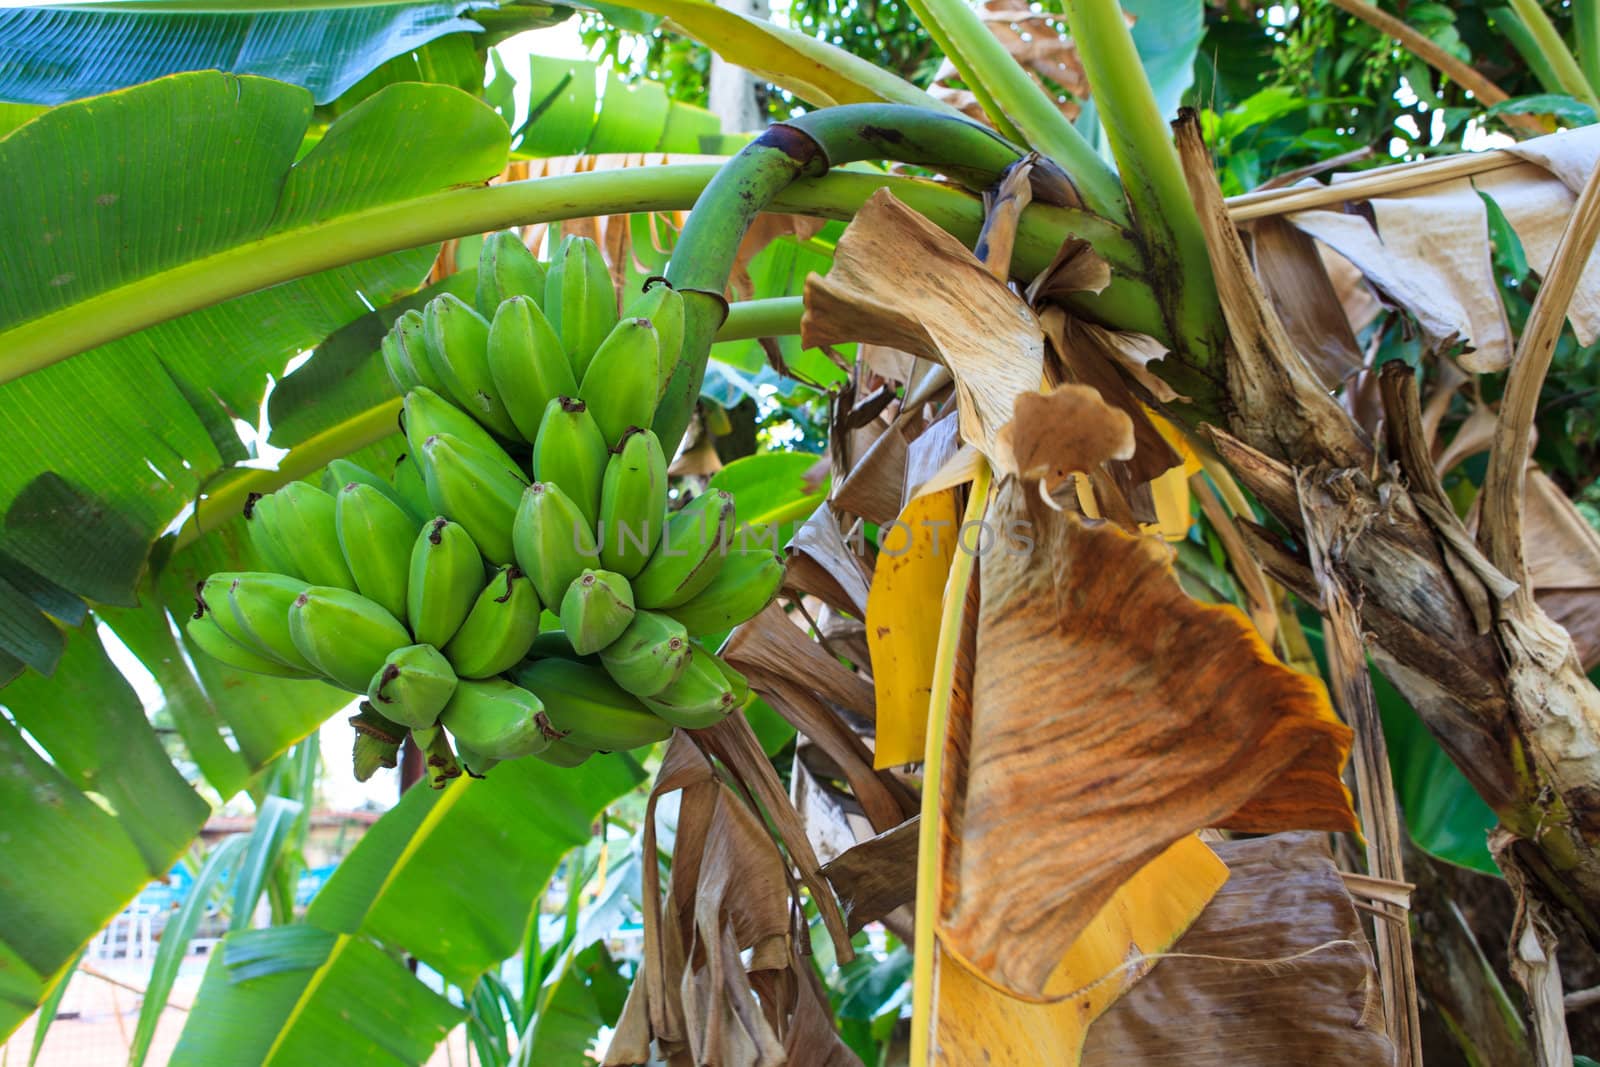 Bunch of ripening bananas on tree